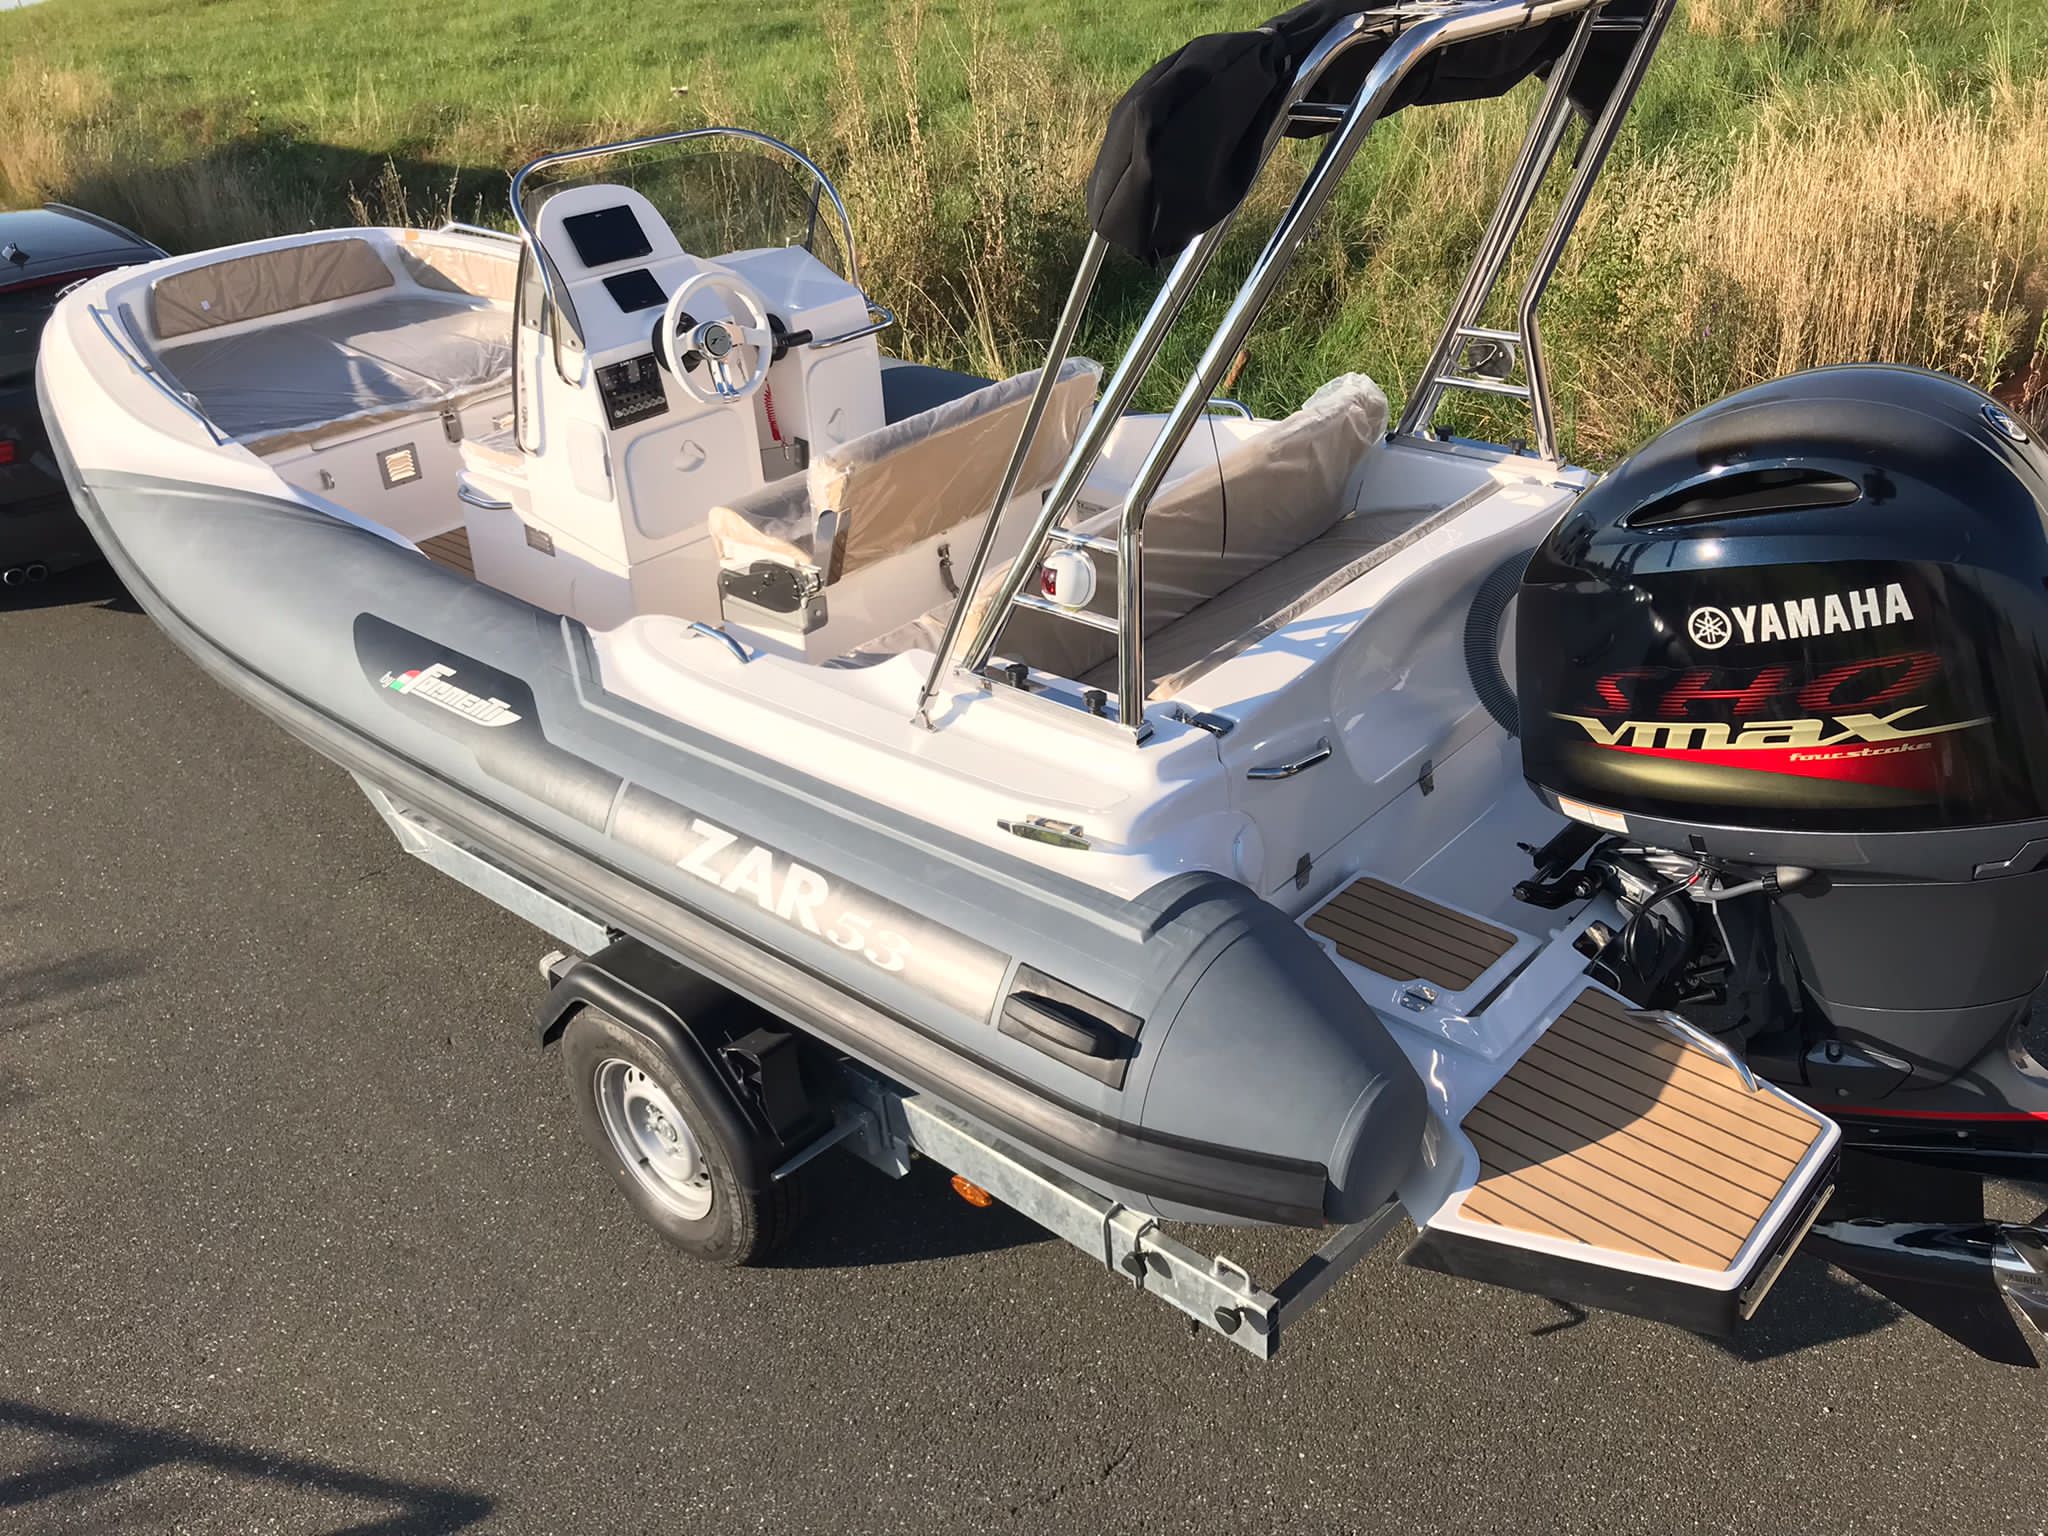 ZAR53 Vorführboot 2021 - Yamaha VMAX SHO 150 PS